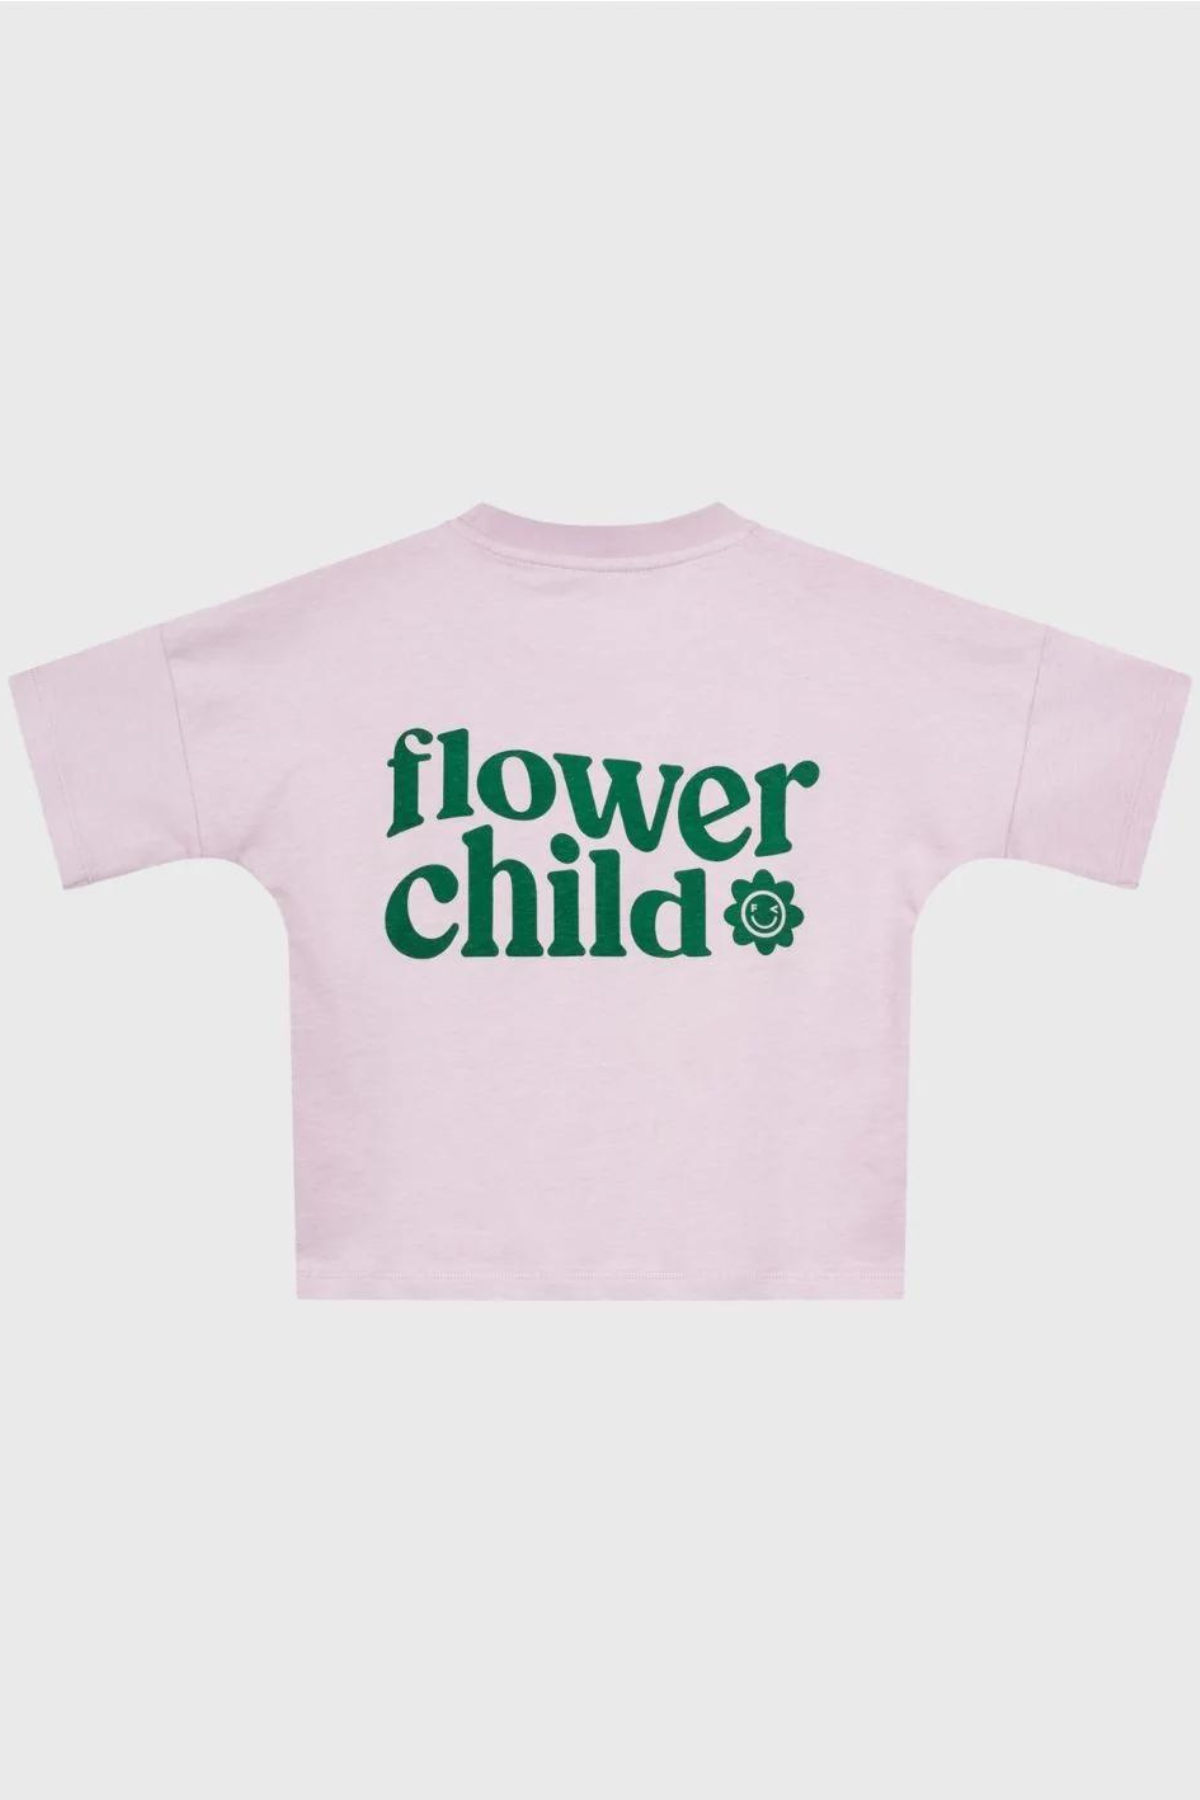 FLOWER CHILD SHIRT KIDS - SYNCSON